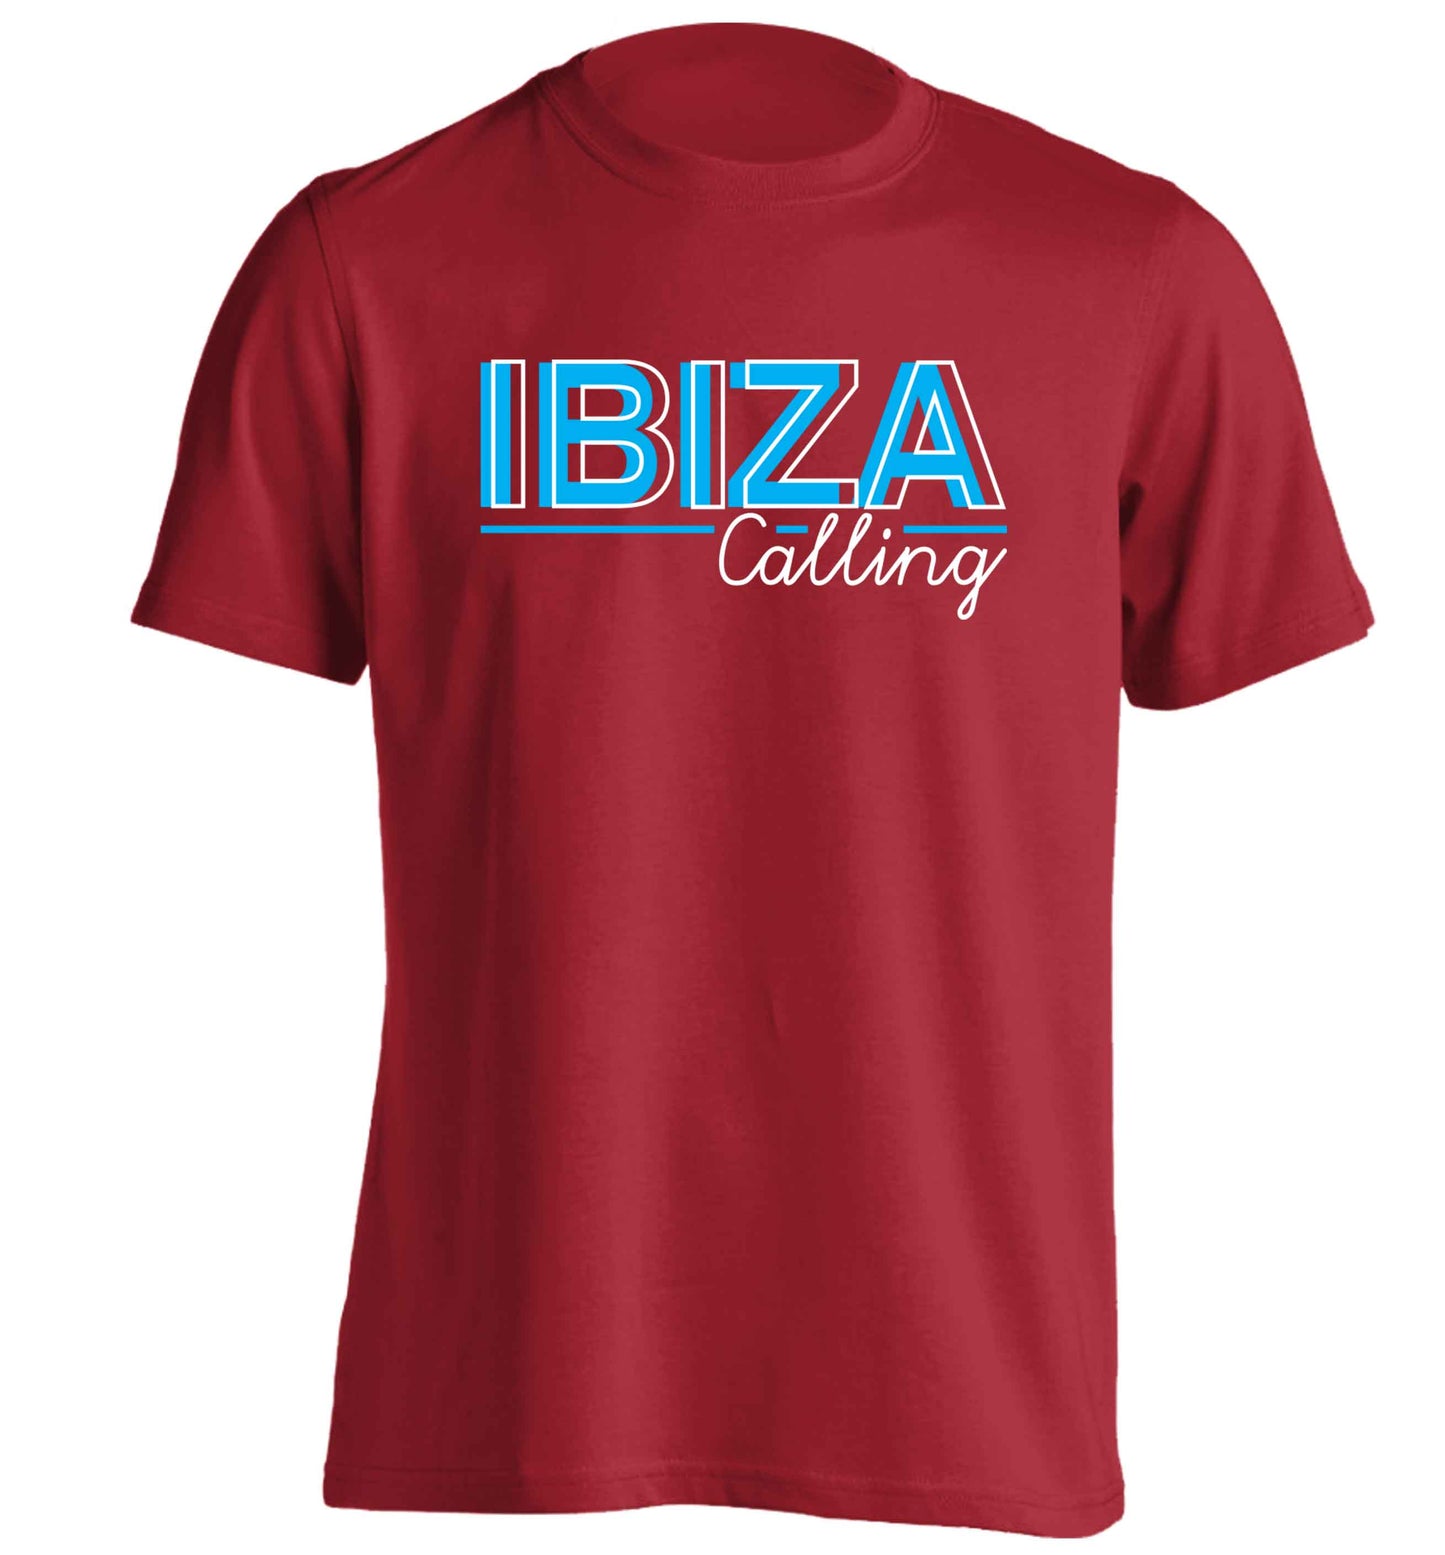 Ibiza calling adults unisex red Tshirt 2XL